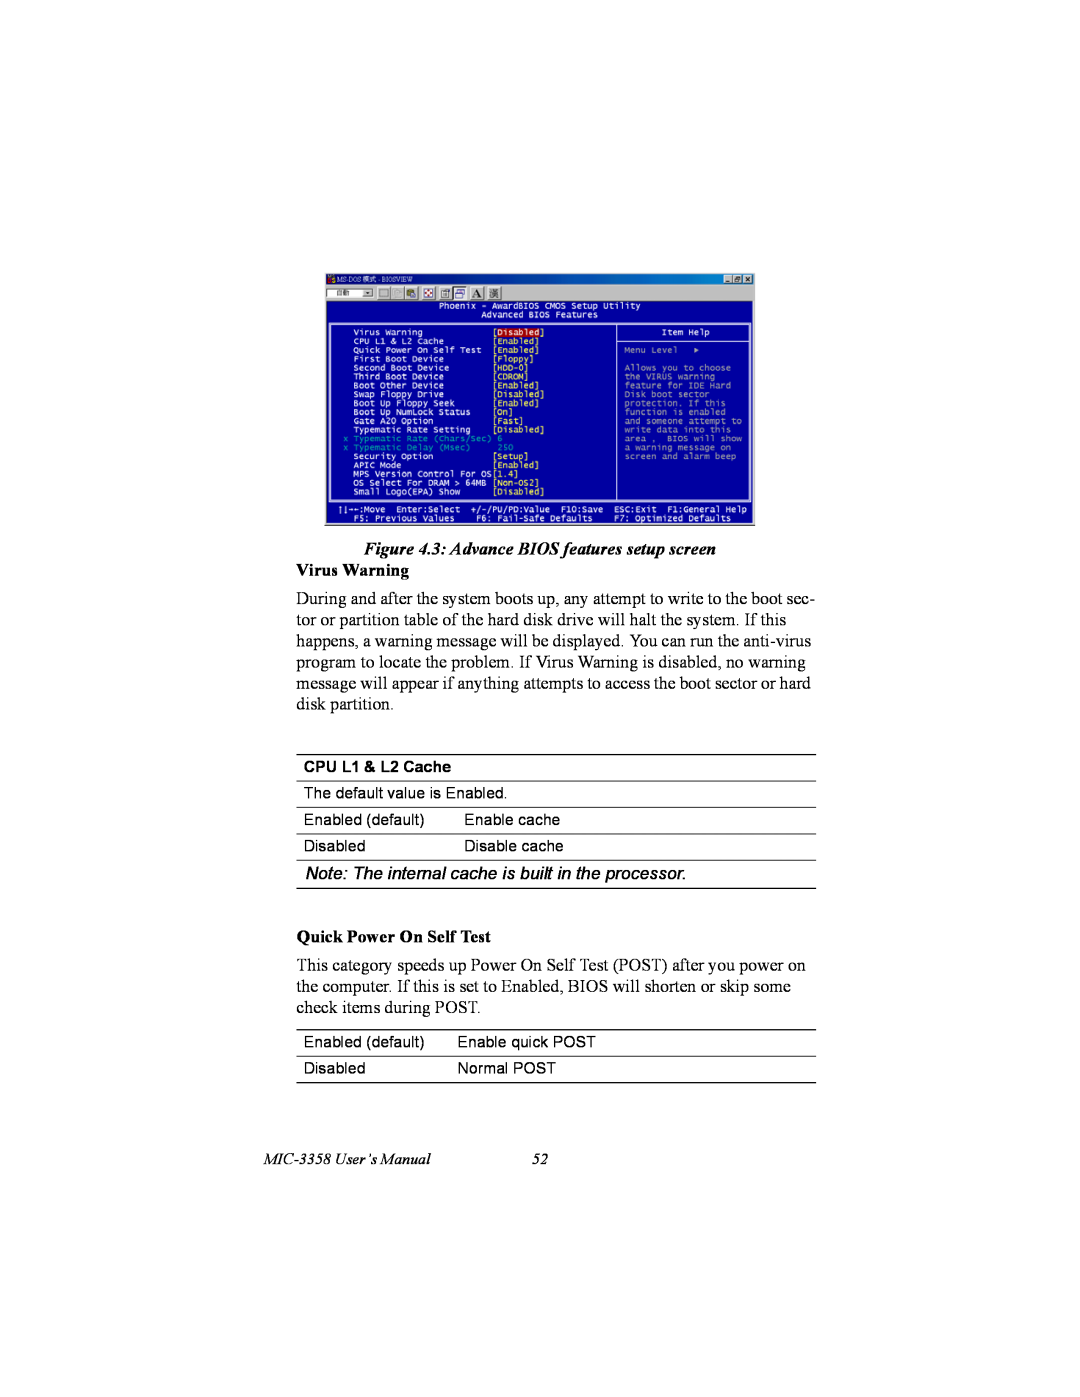 Intel MIC-3358 user manual 3 Advance BIOS features setup screen Virus Warning, Quick Power On Self Test 